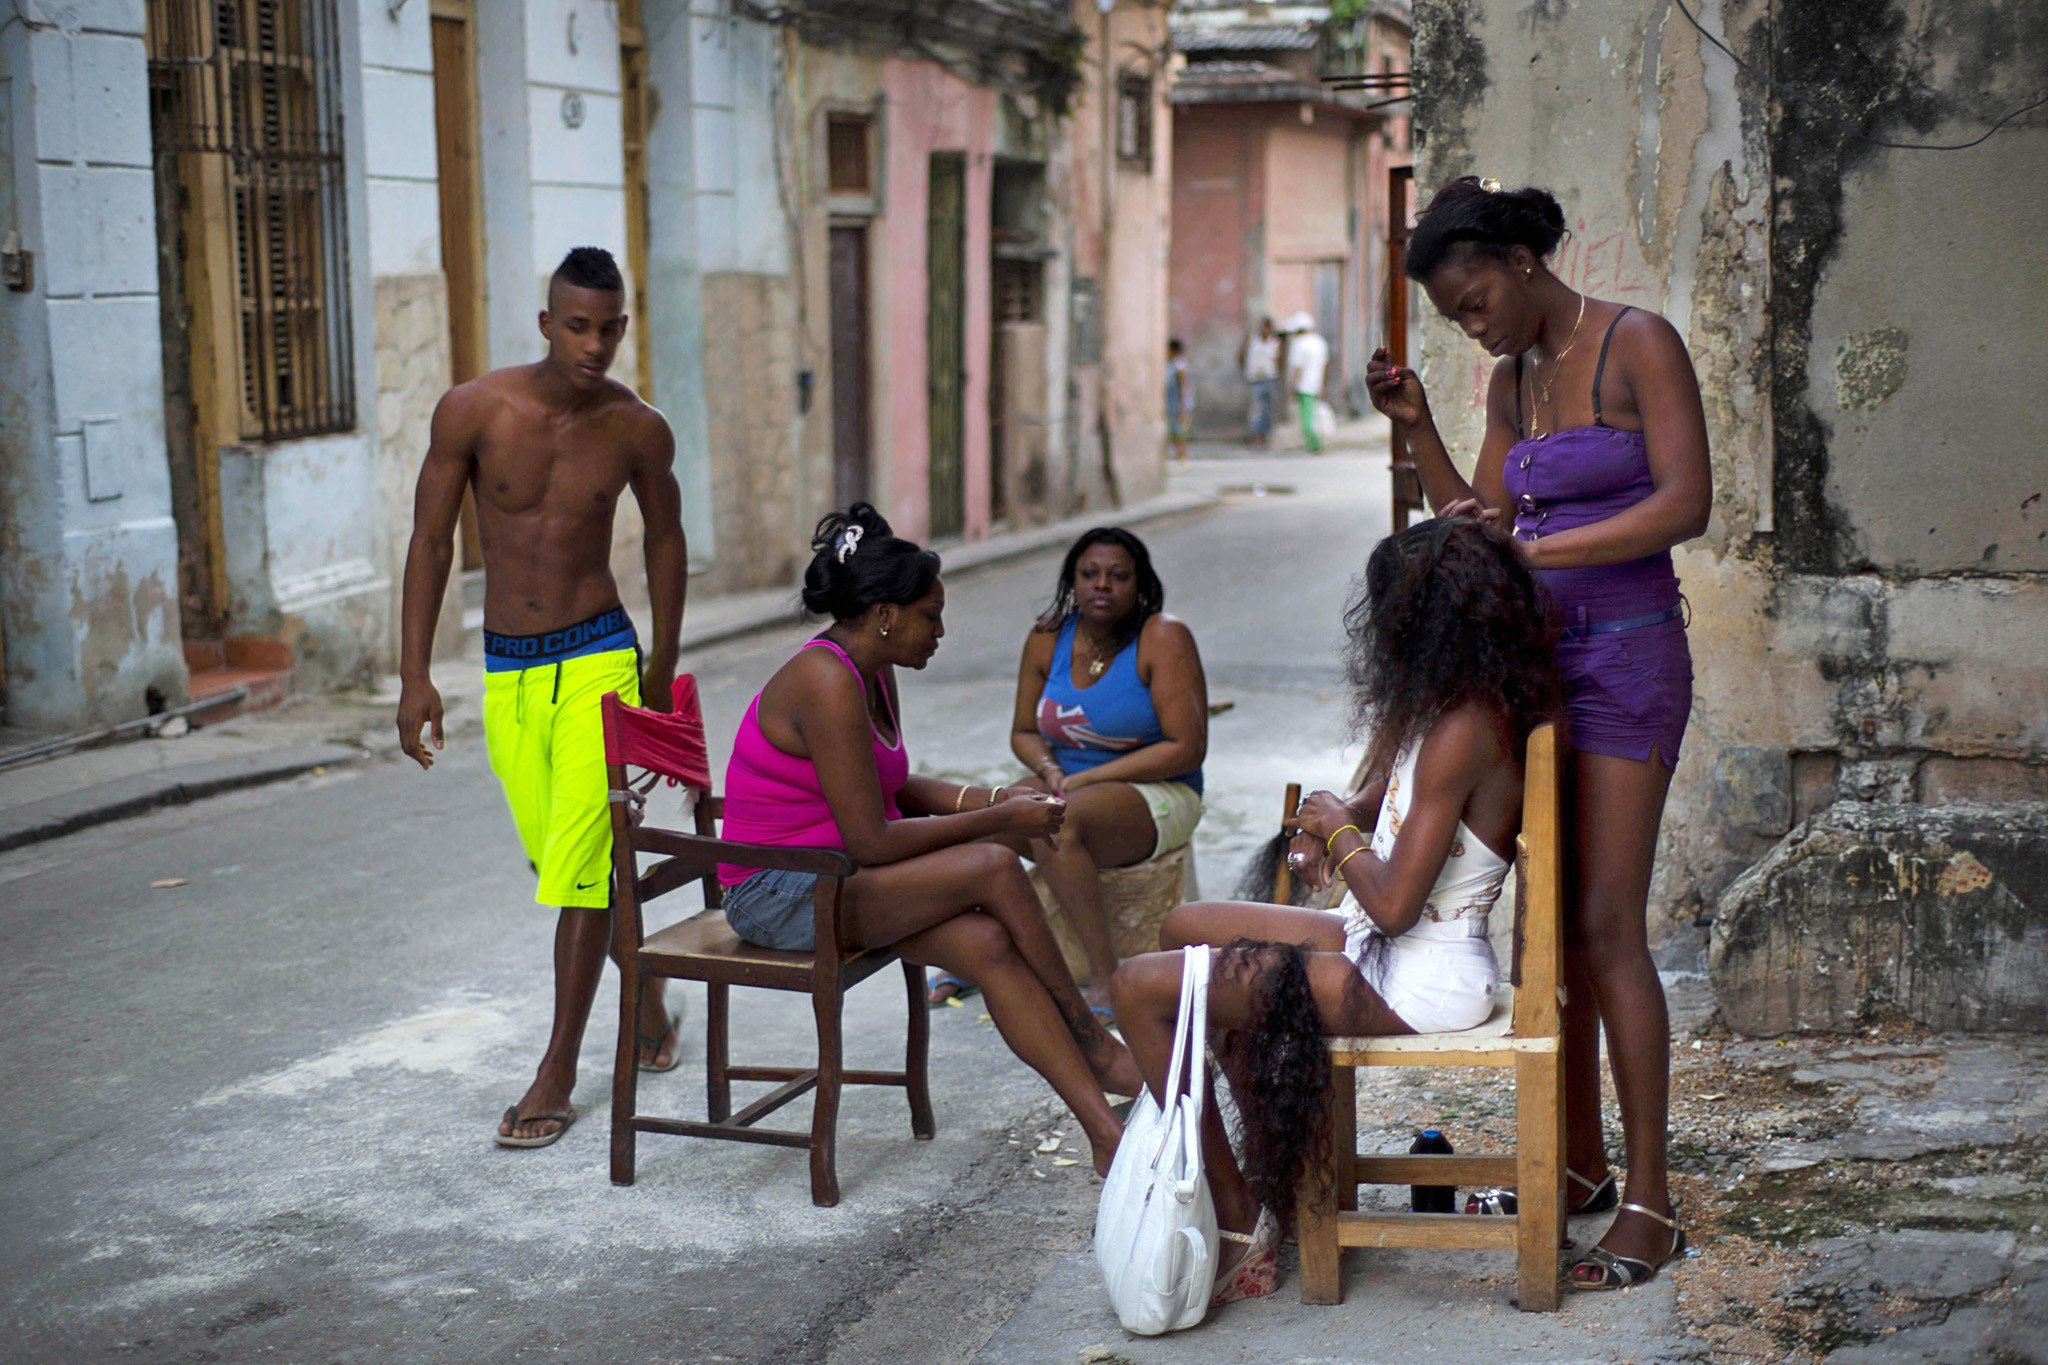 Cuba sex prostitution iolanes.eu